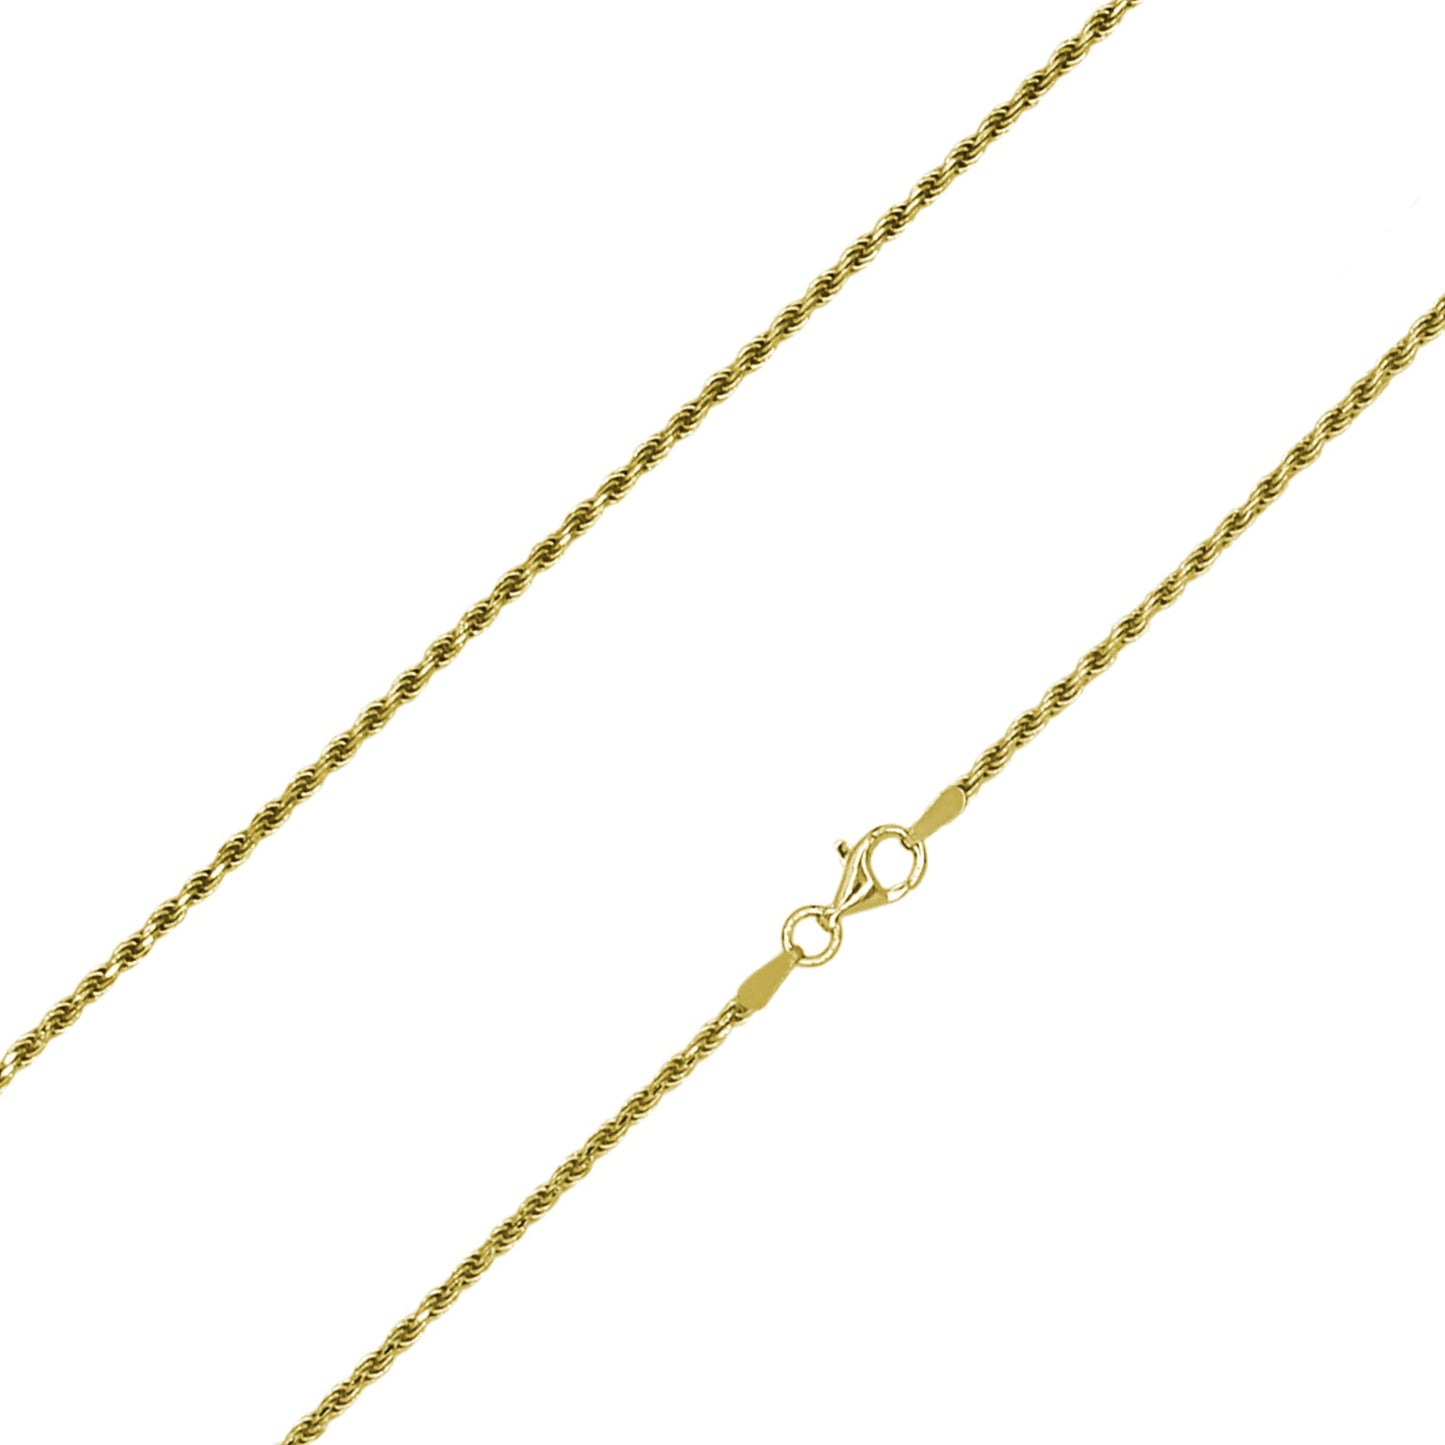 Stellari Gold 18 Karat over Sterling Silver 2mm Diamond Cut Rope Chain